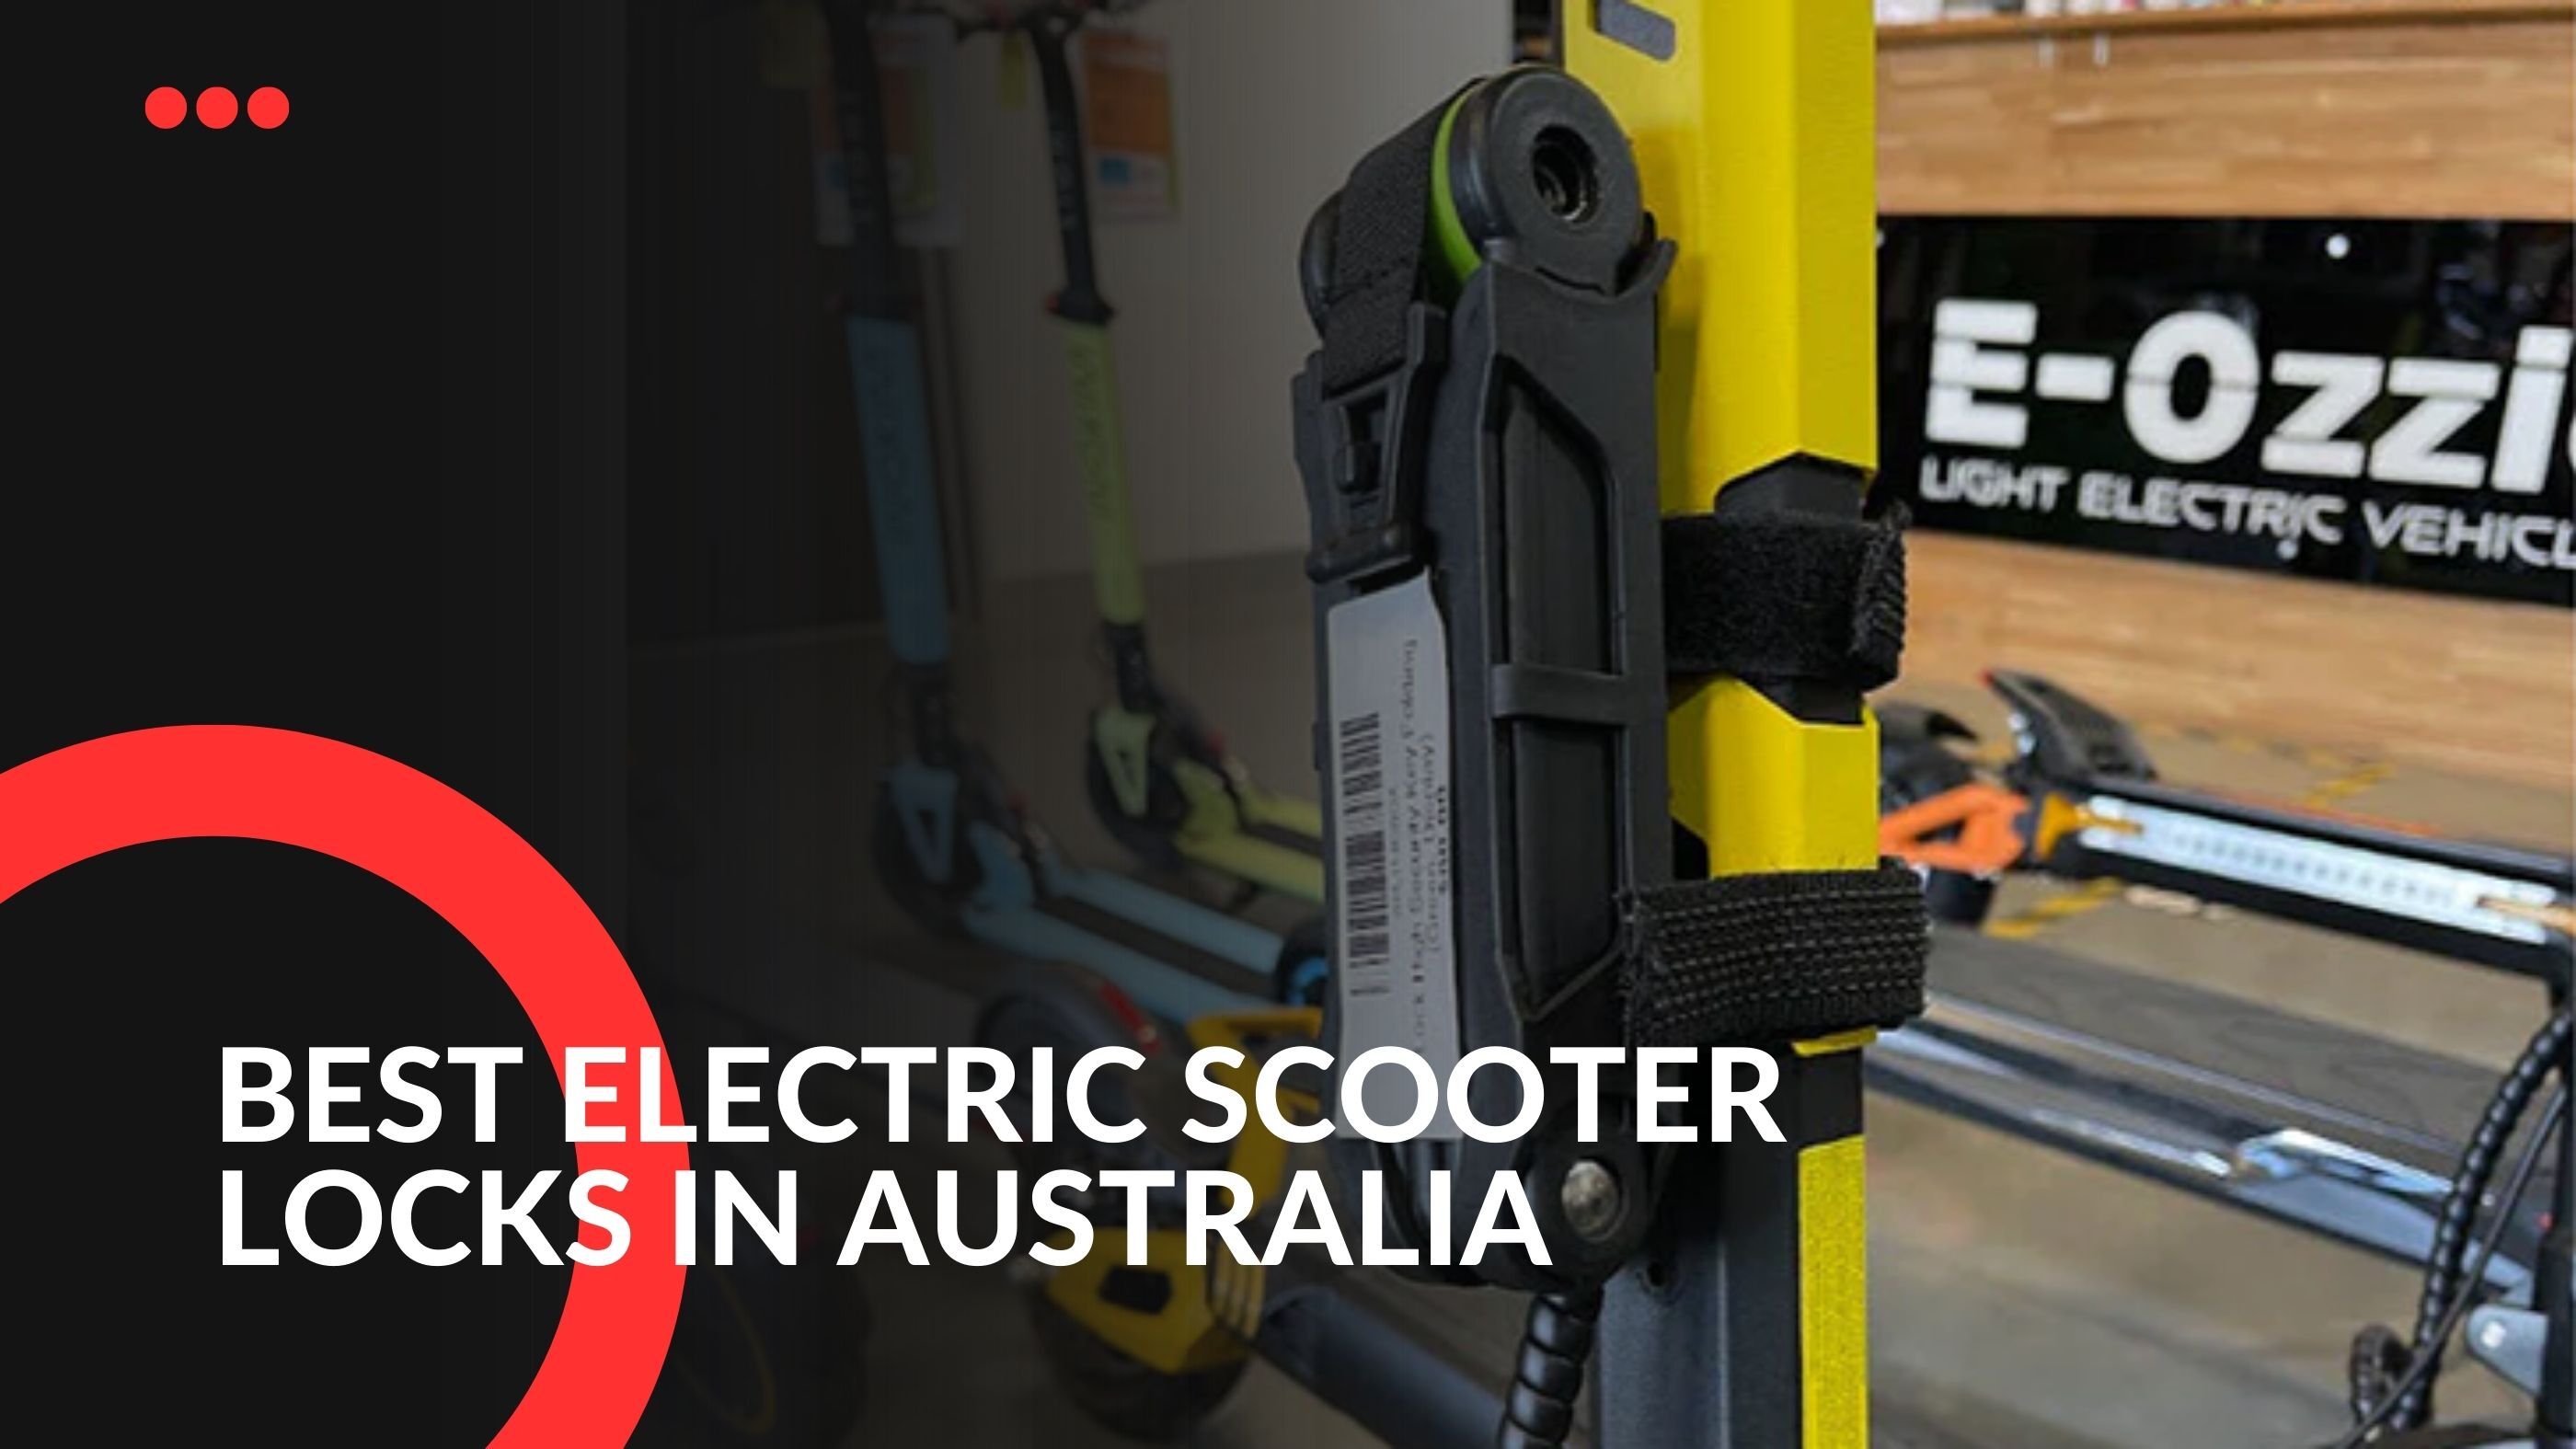 Best Electric Scooter Locks in Australia - Eozzie